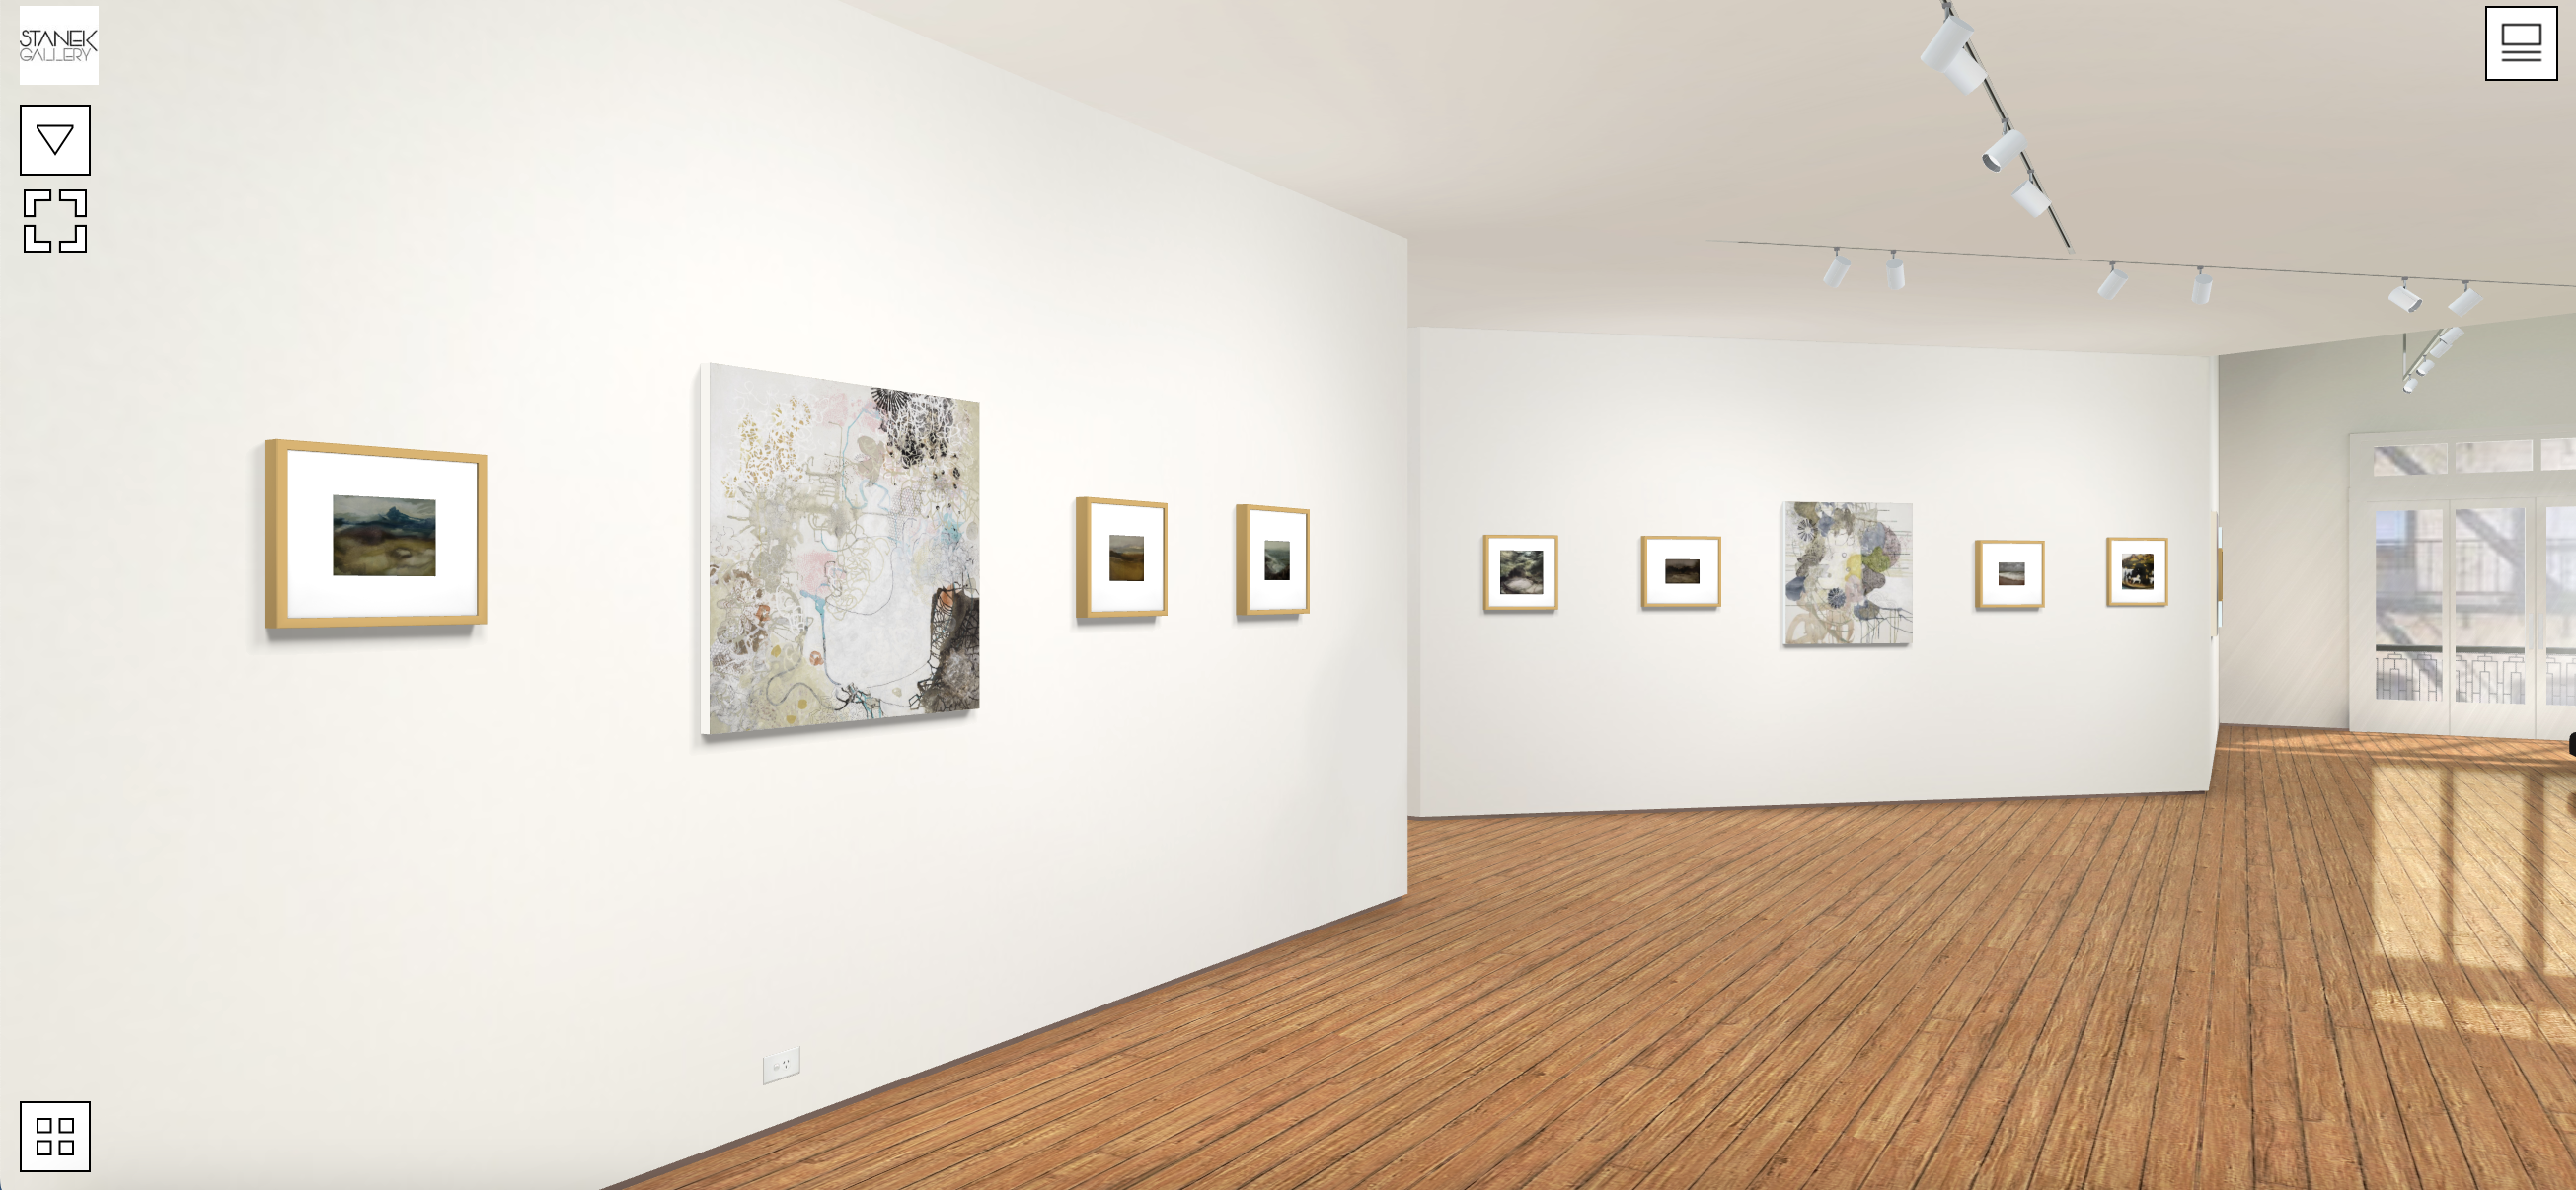 Stanek Gallery September exhibition - Fisher, Michaud, Flom - Of Memory